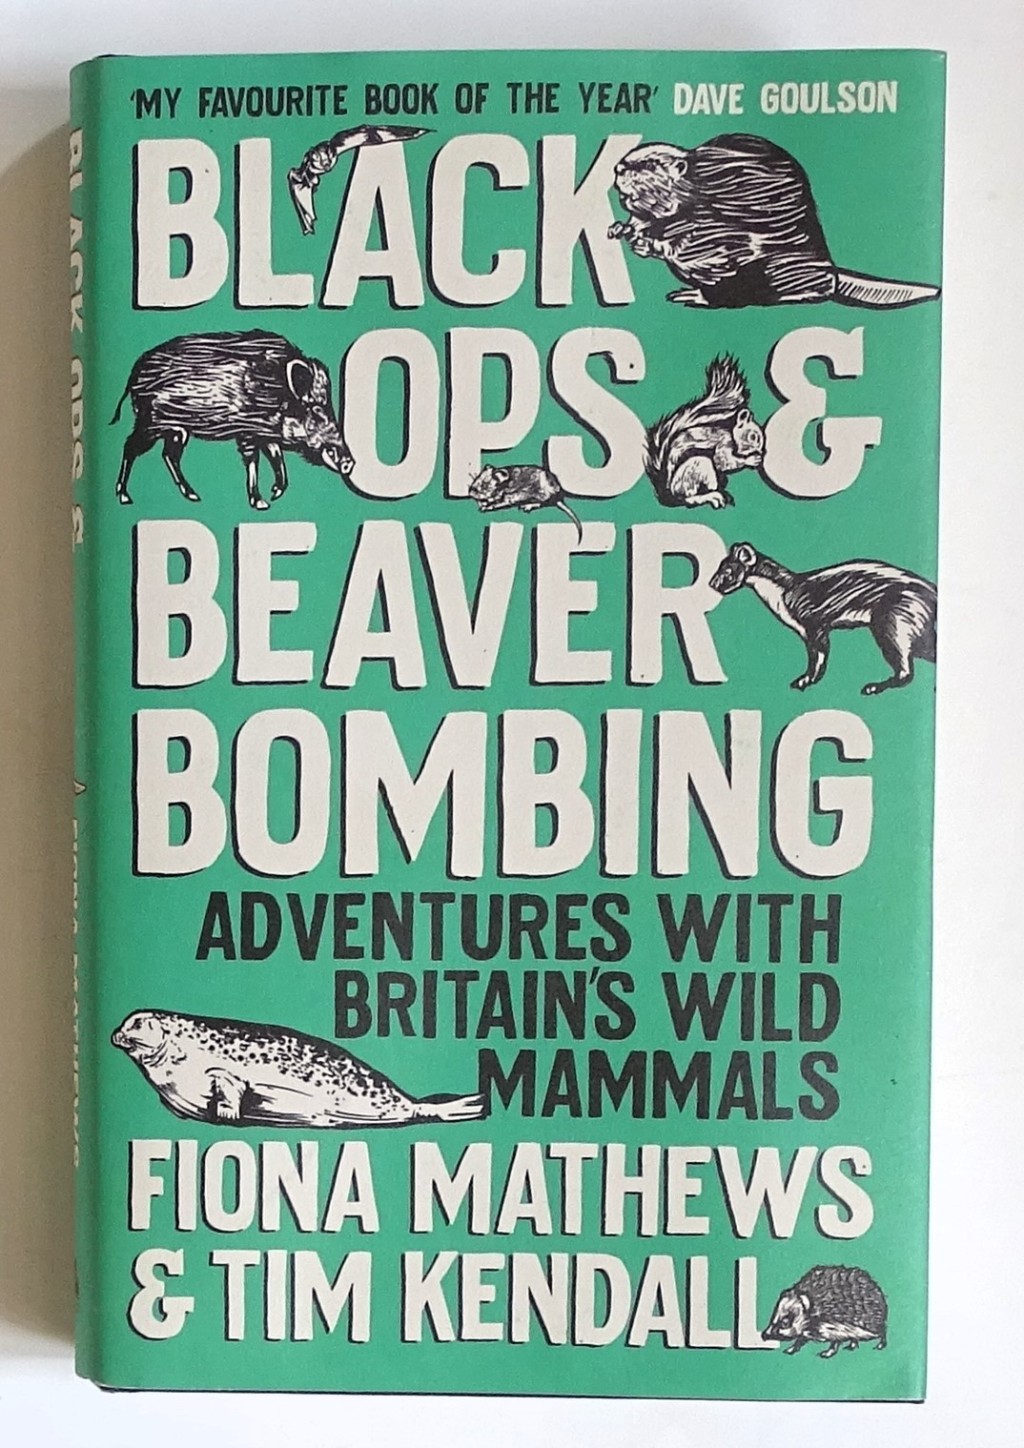 Beaver bombs part II